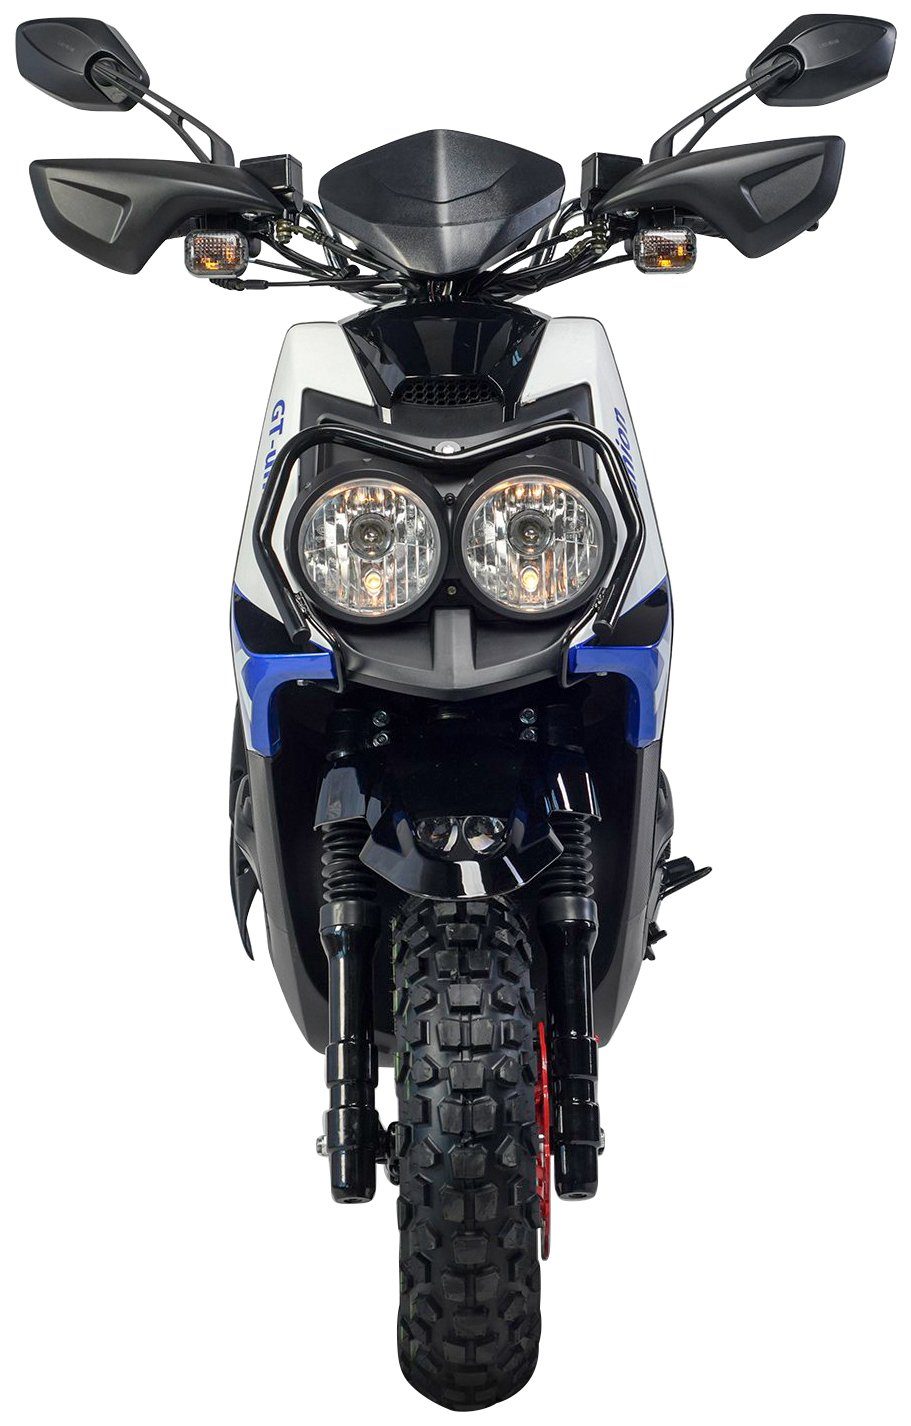 GT UNION Motorroller PX 55 125 Euro ccm, Cross-Concept, weiß/blau/schwarz 5 85 km/h